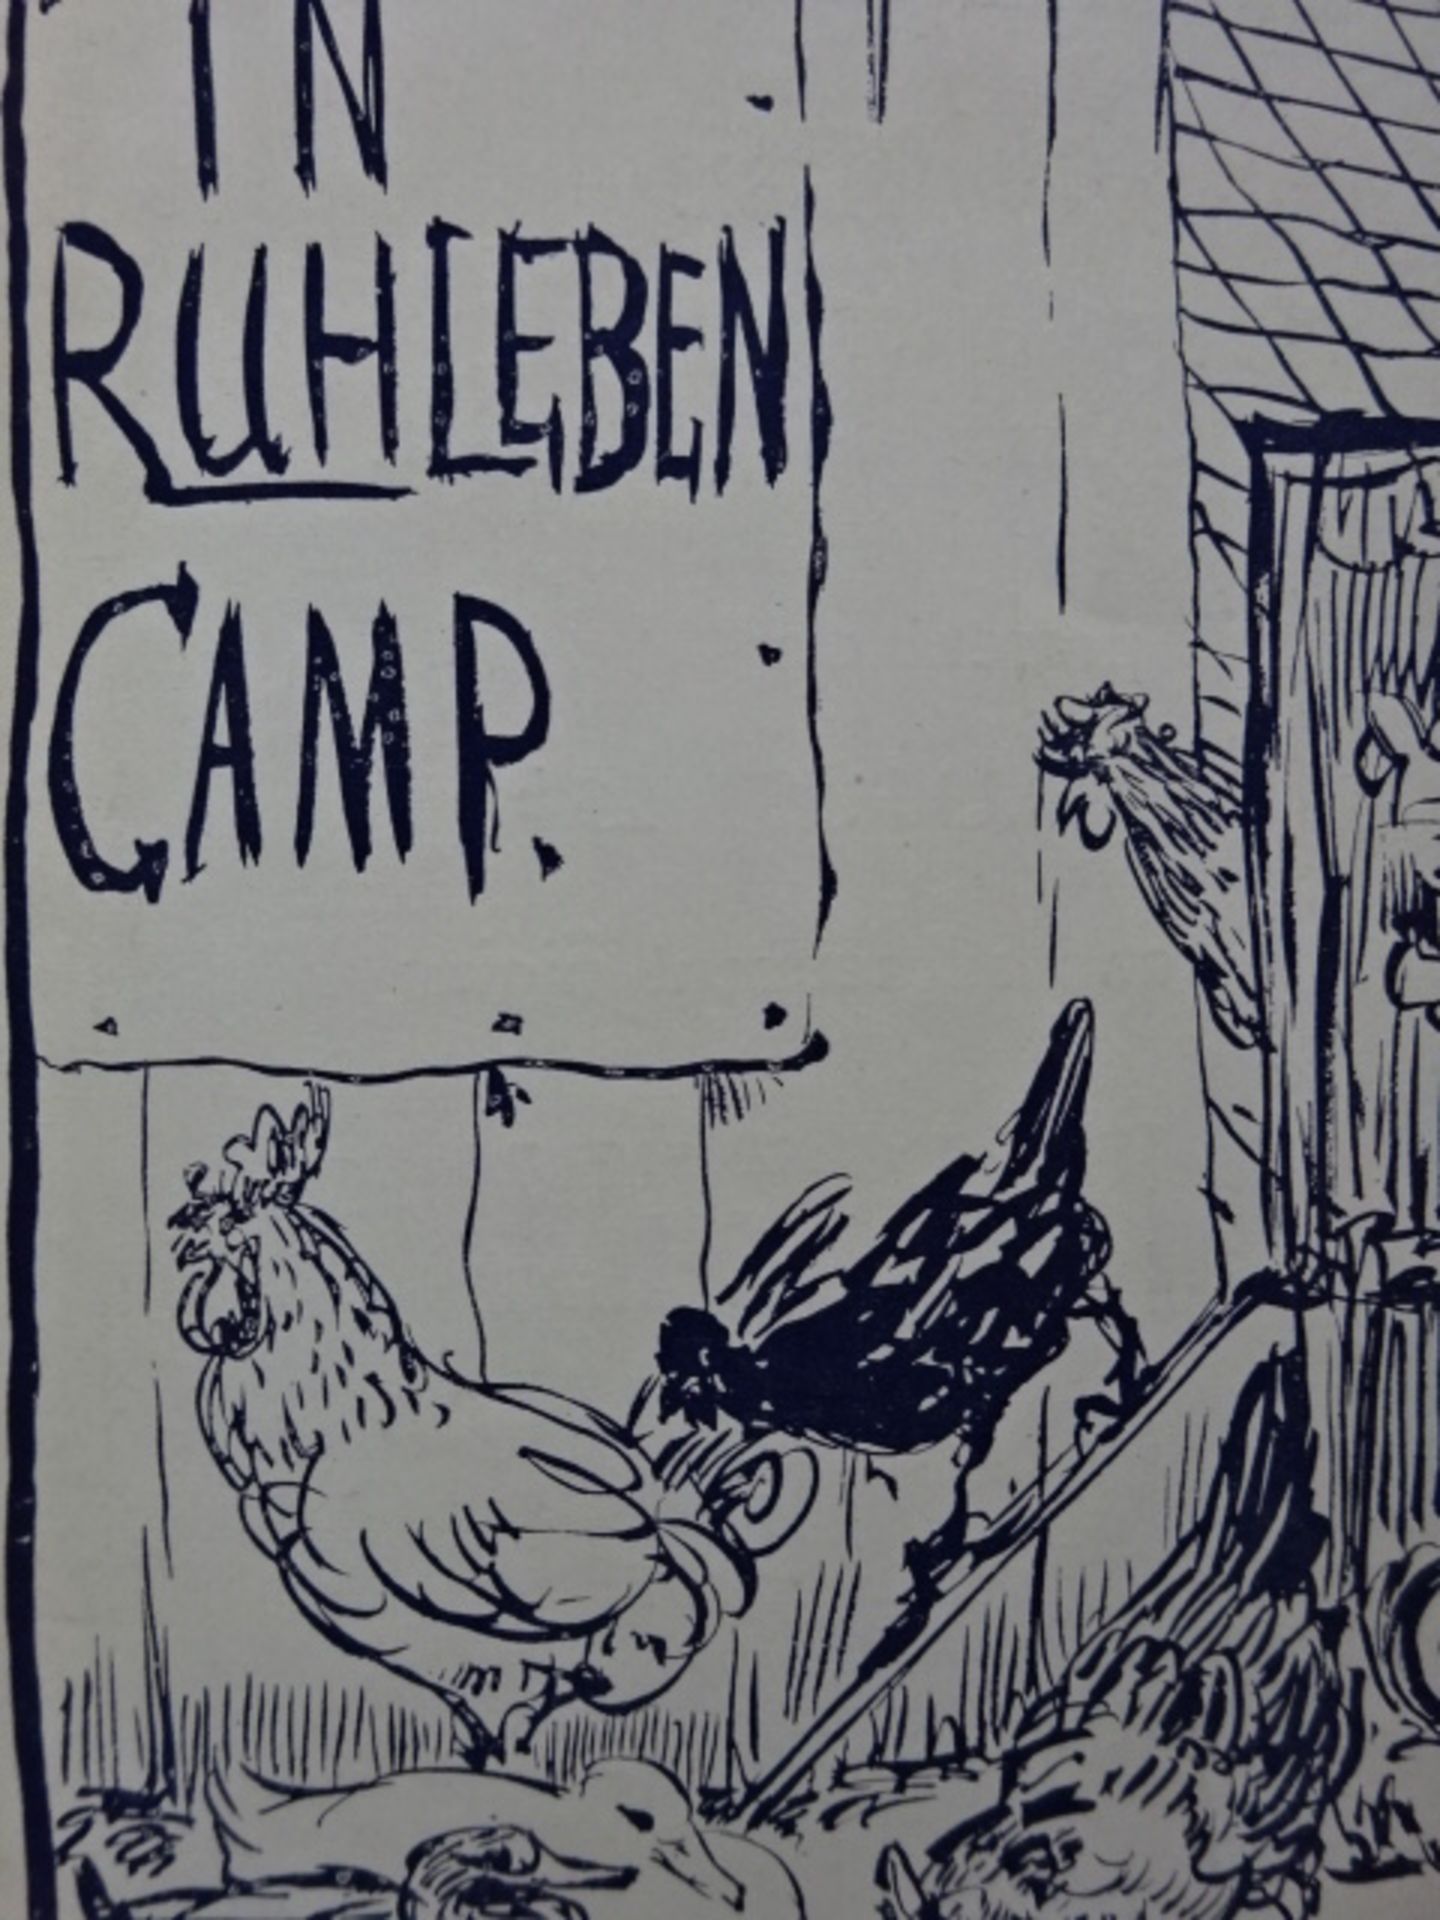 In Ruhleben Camp 1915